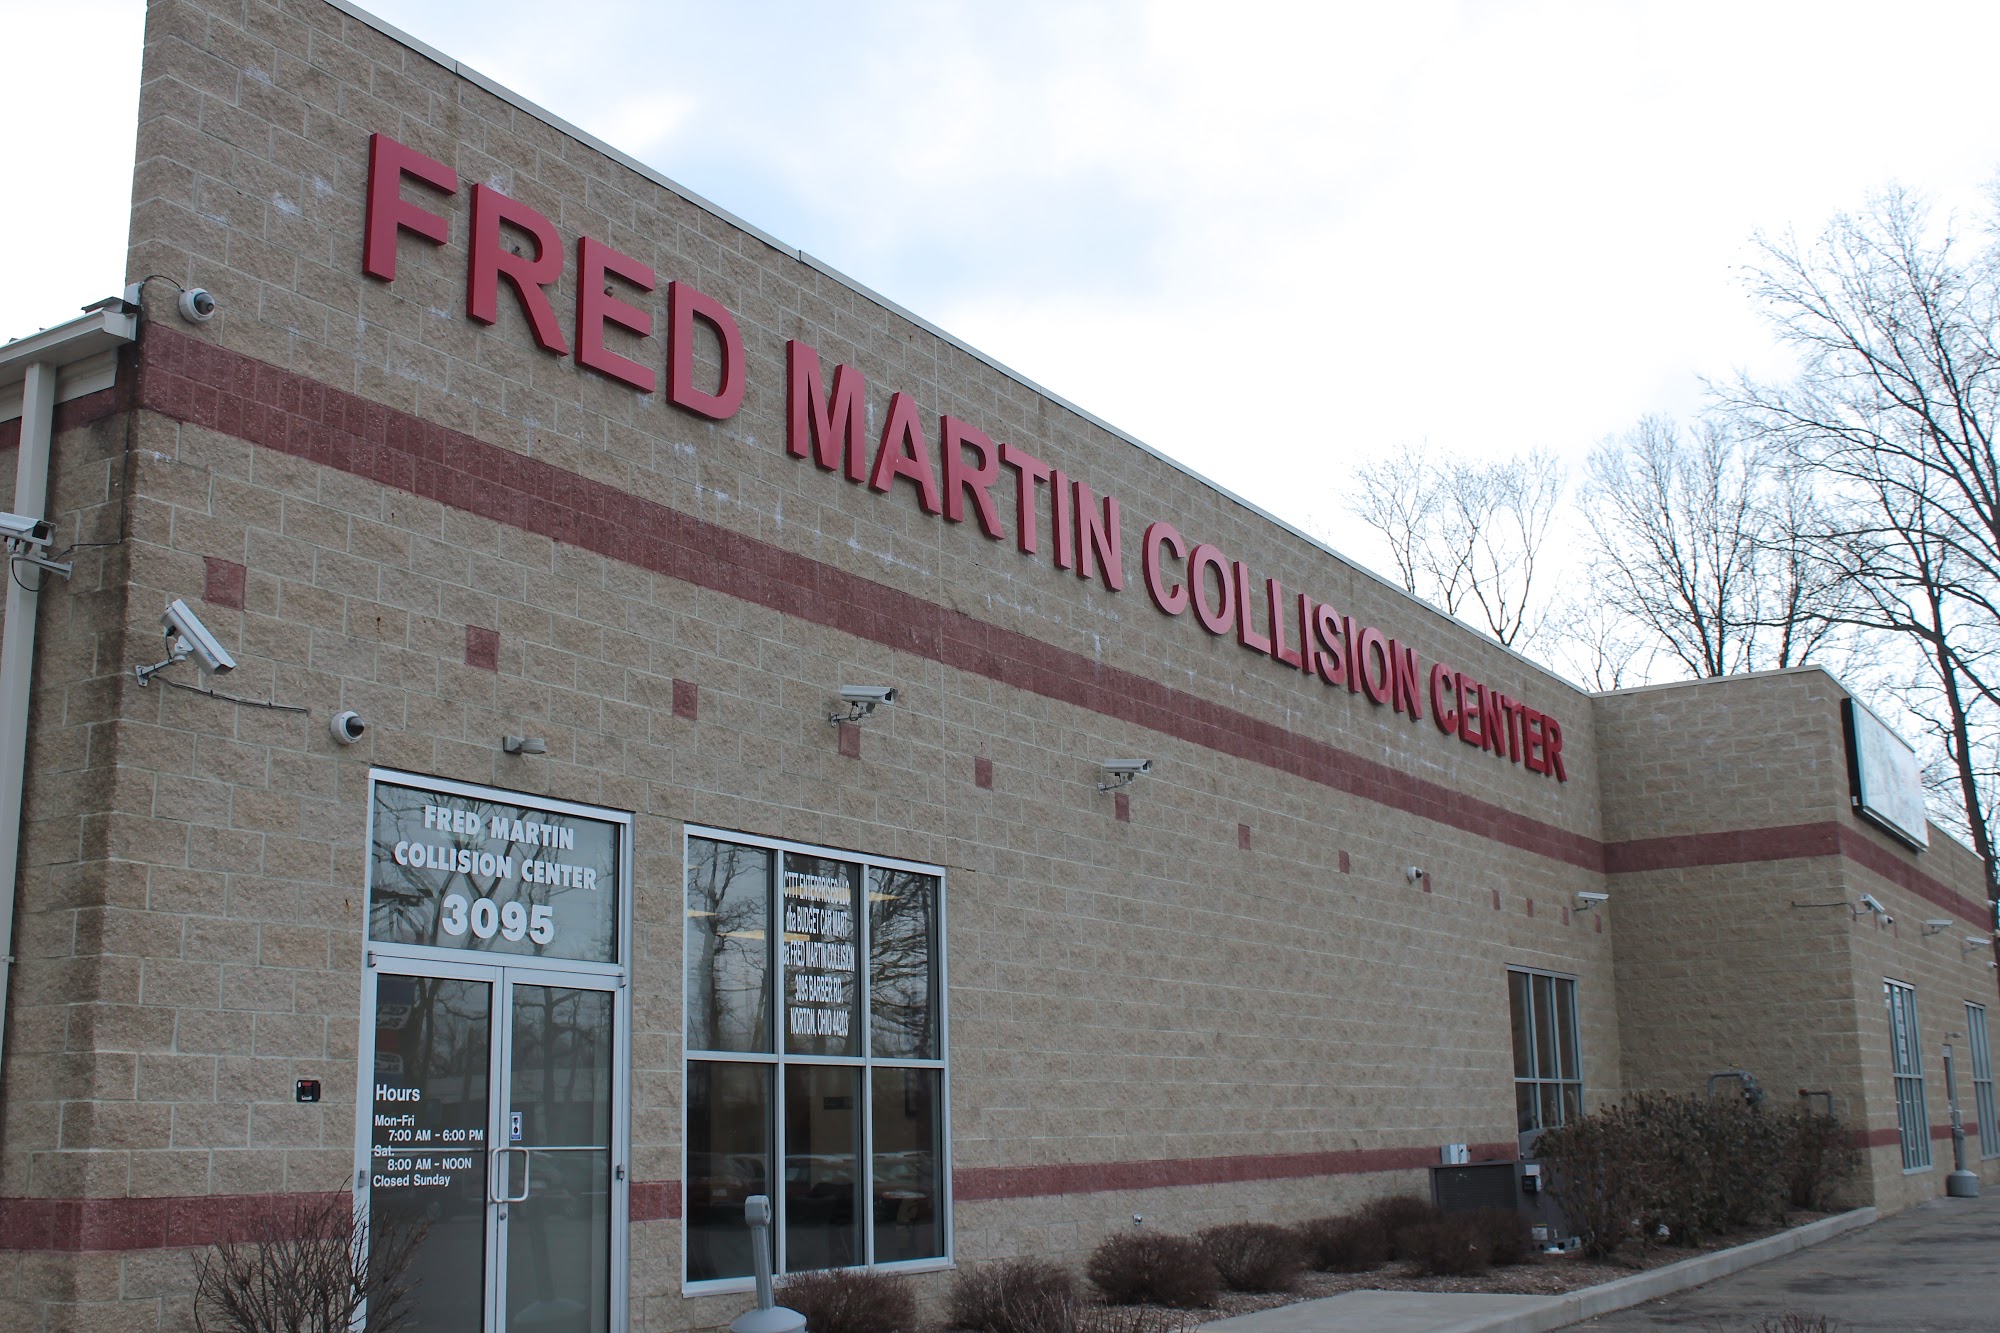 Fred Martin Collision Center